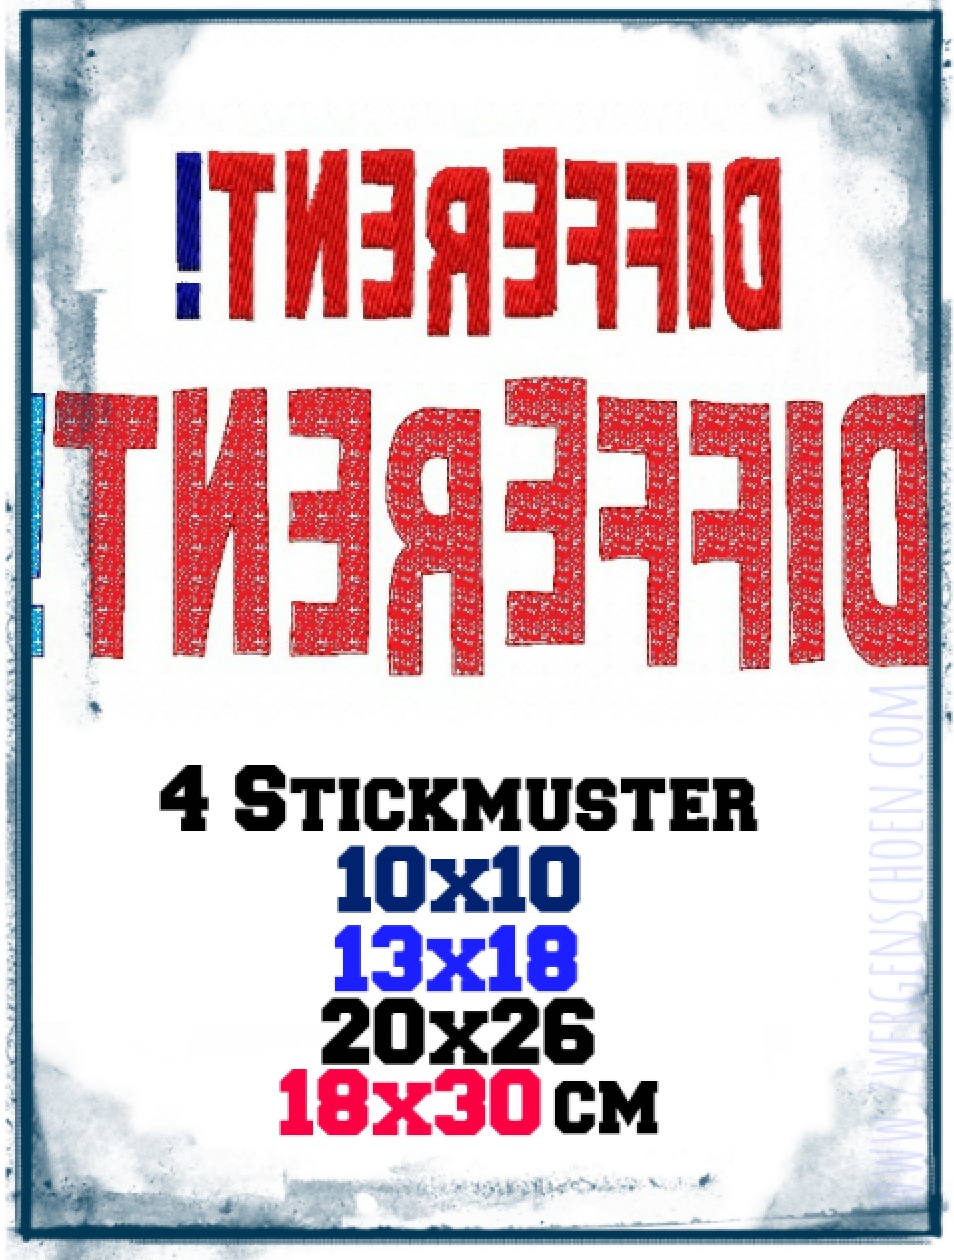 ♥DIFFERENT♥ Stickmuster STATEMENT 10x10 13x18 20x26 18x30cm